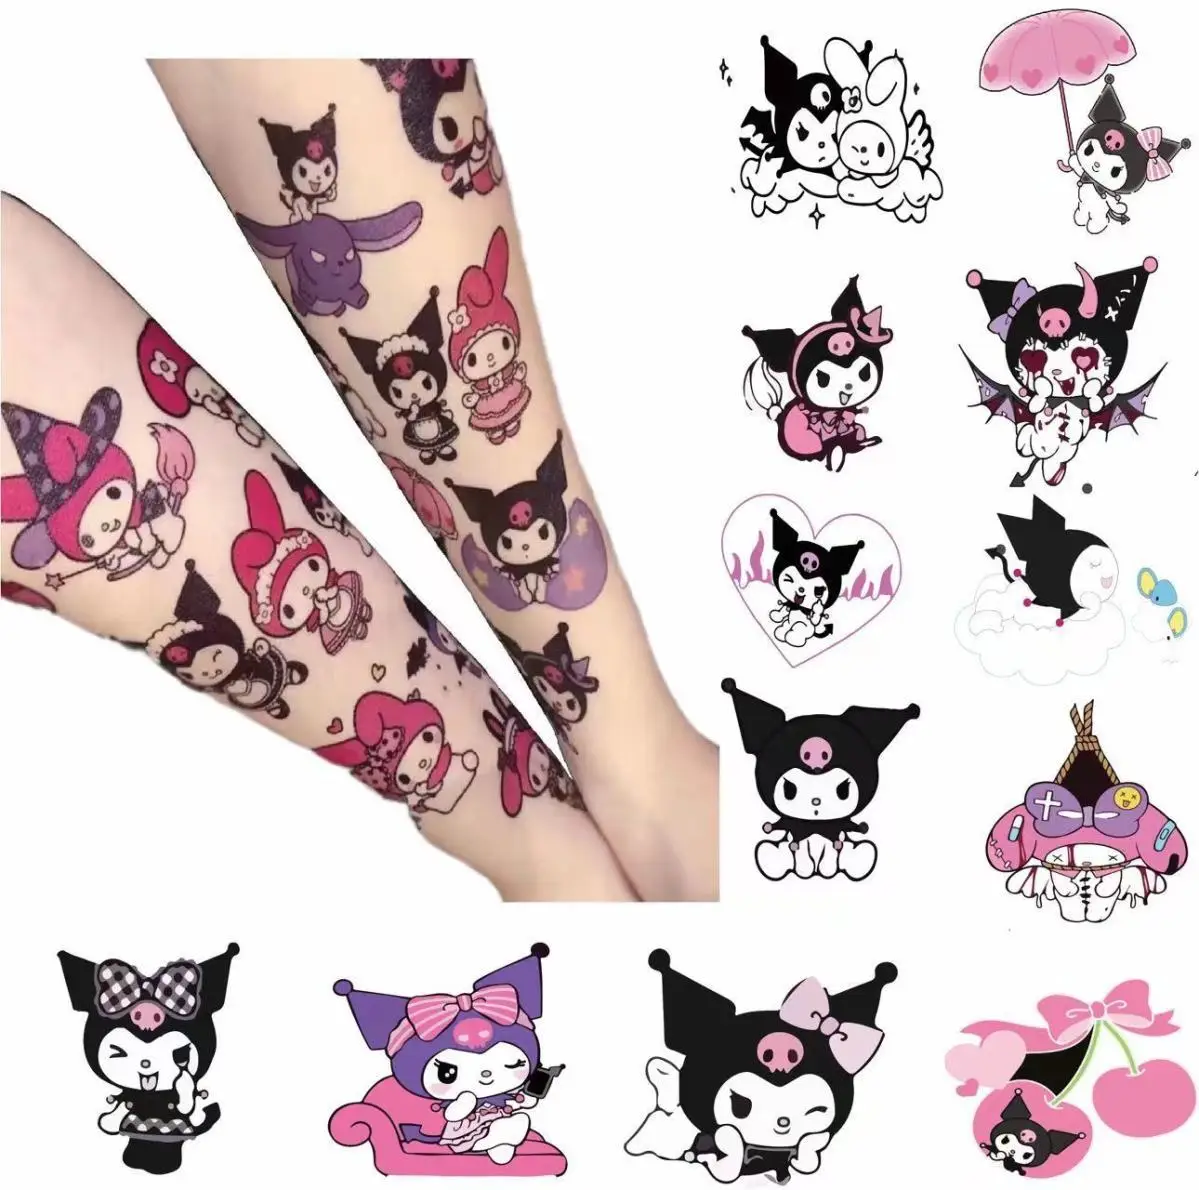 Hello Kitty tattoo located on the wrist, fine line